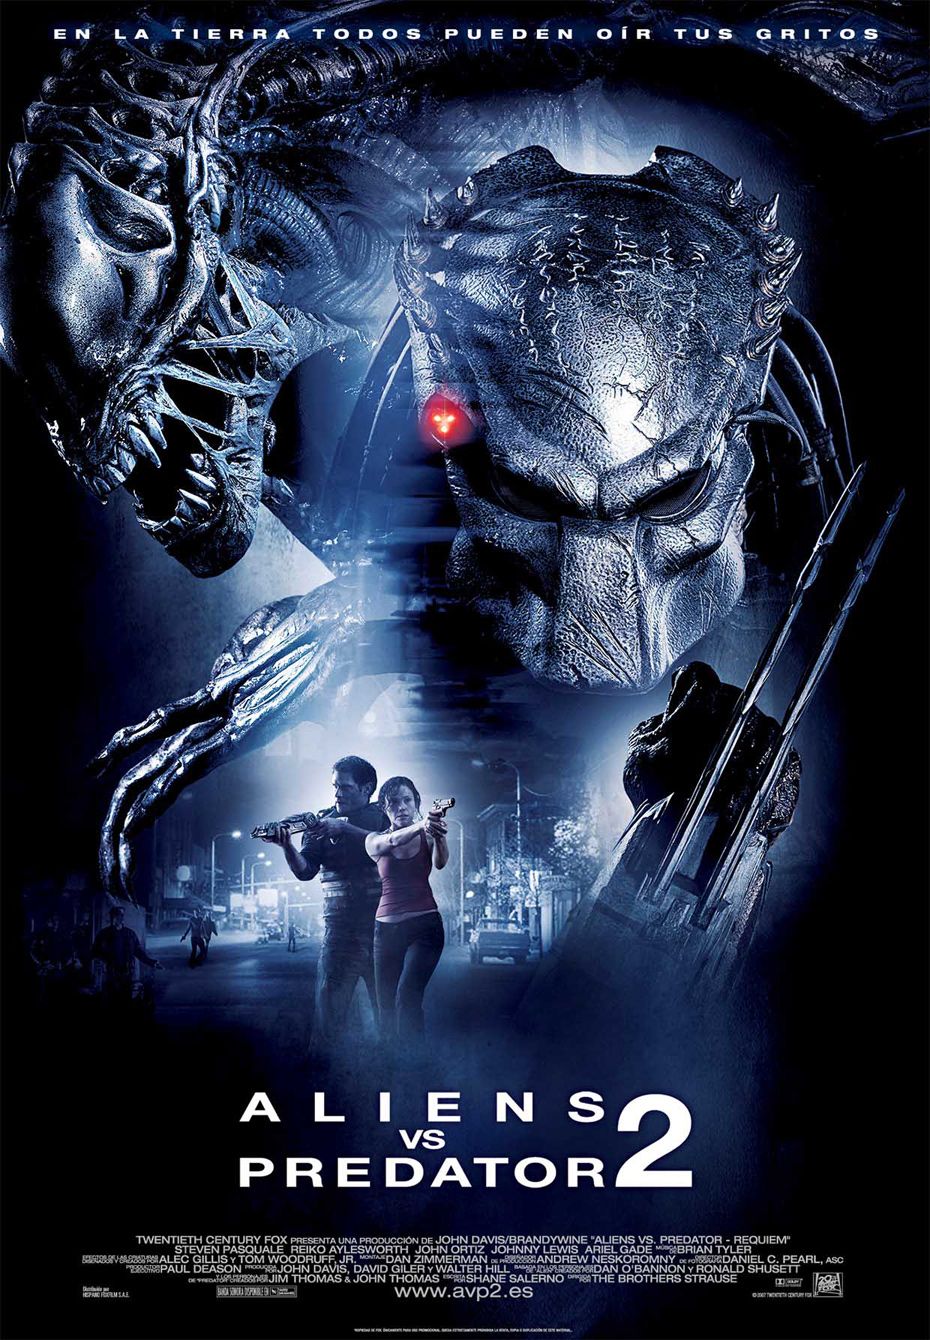 FULL MOVIE: Aliens vs. Predator: Requiem (2007)